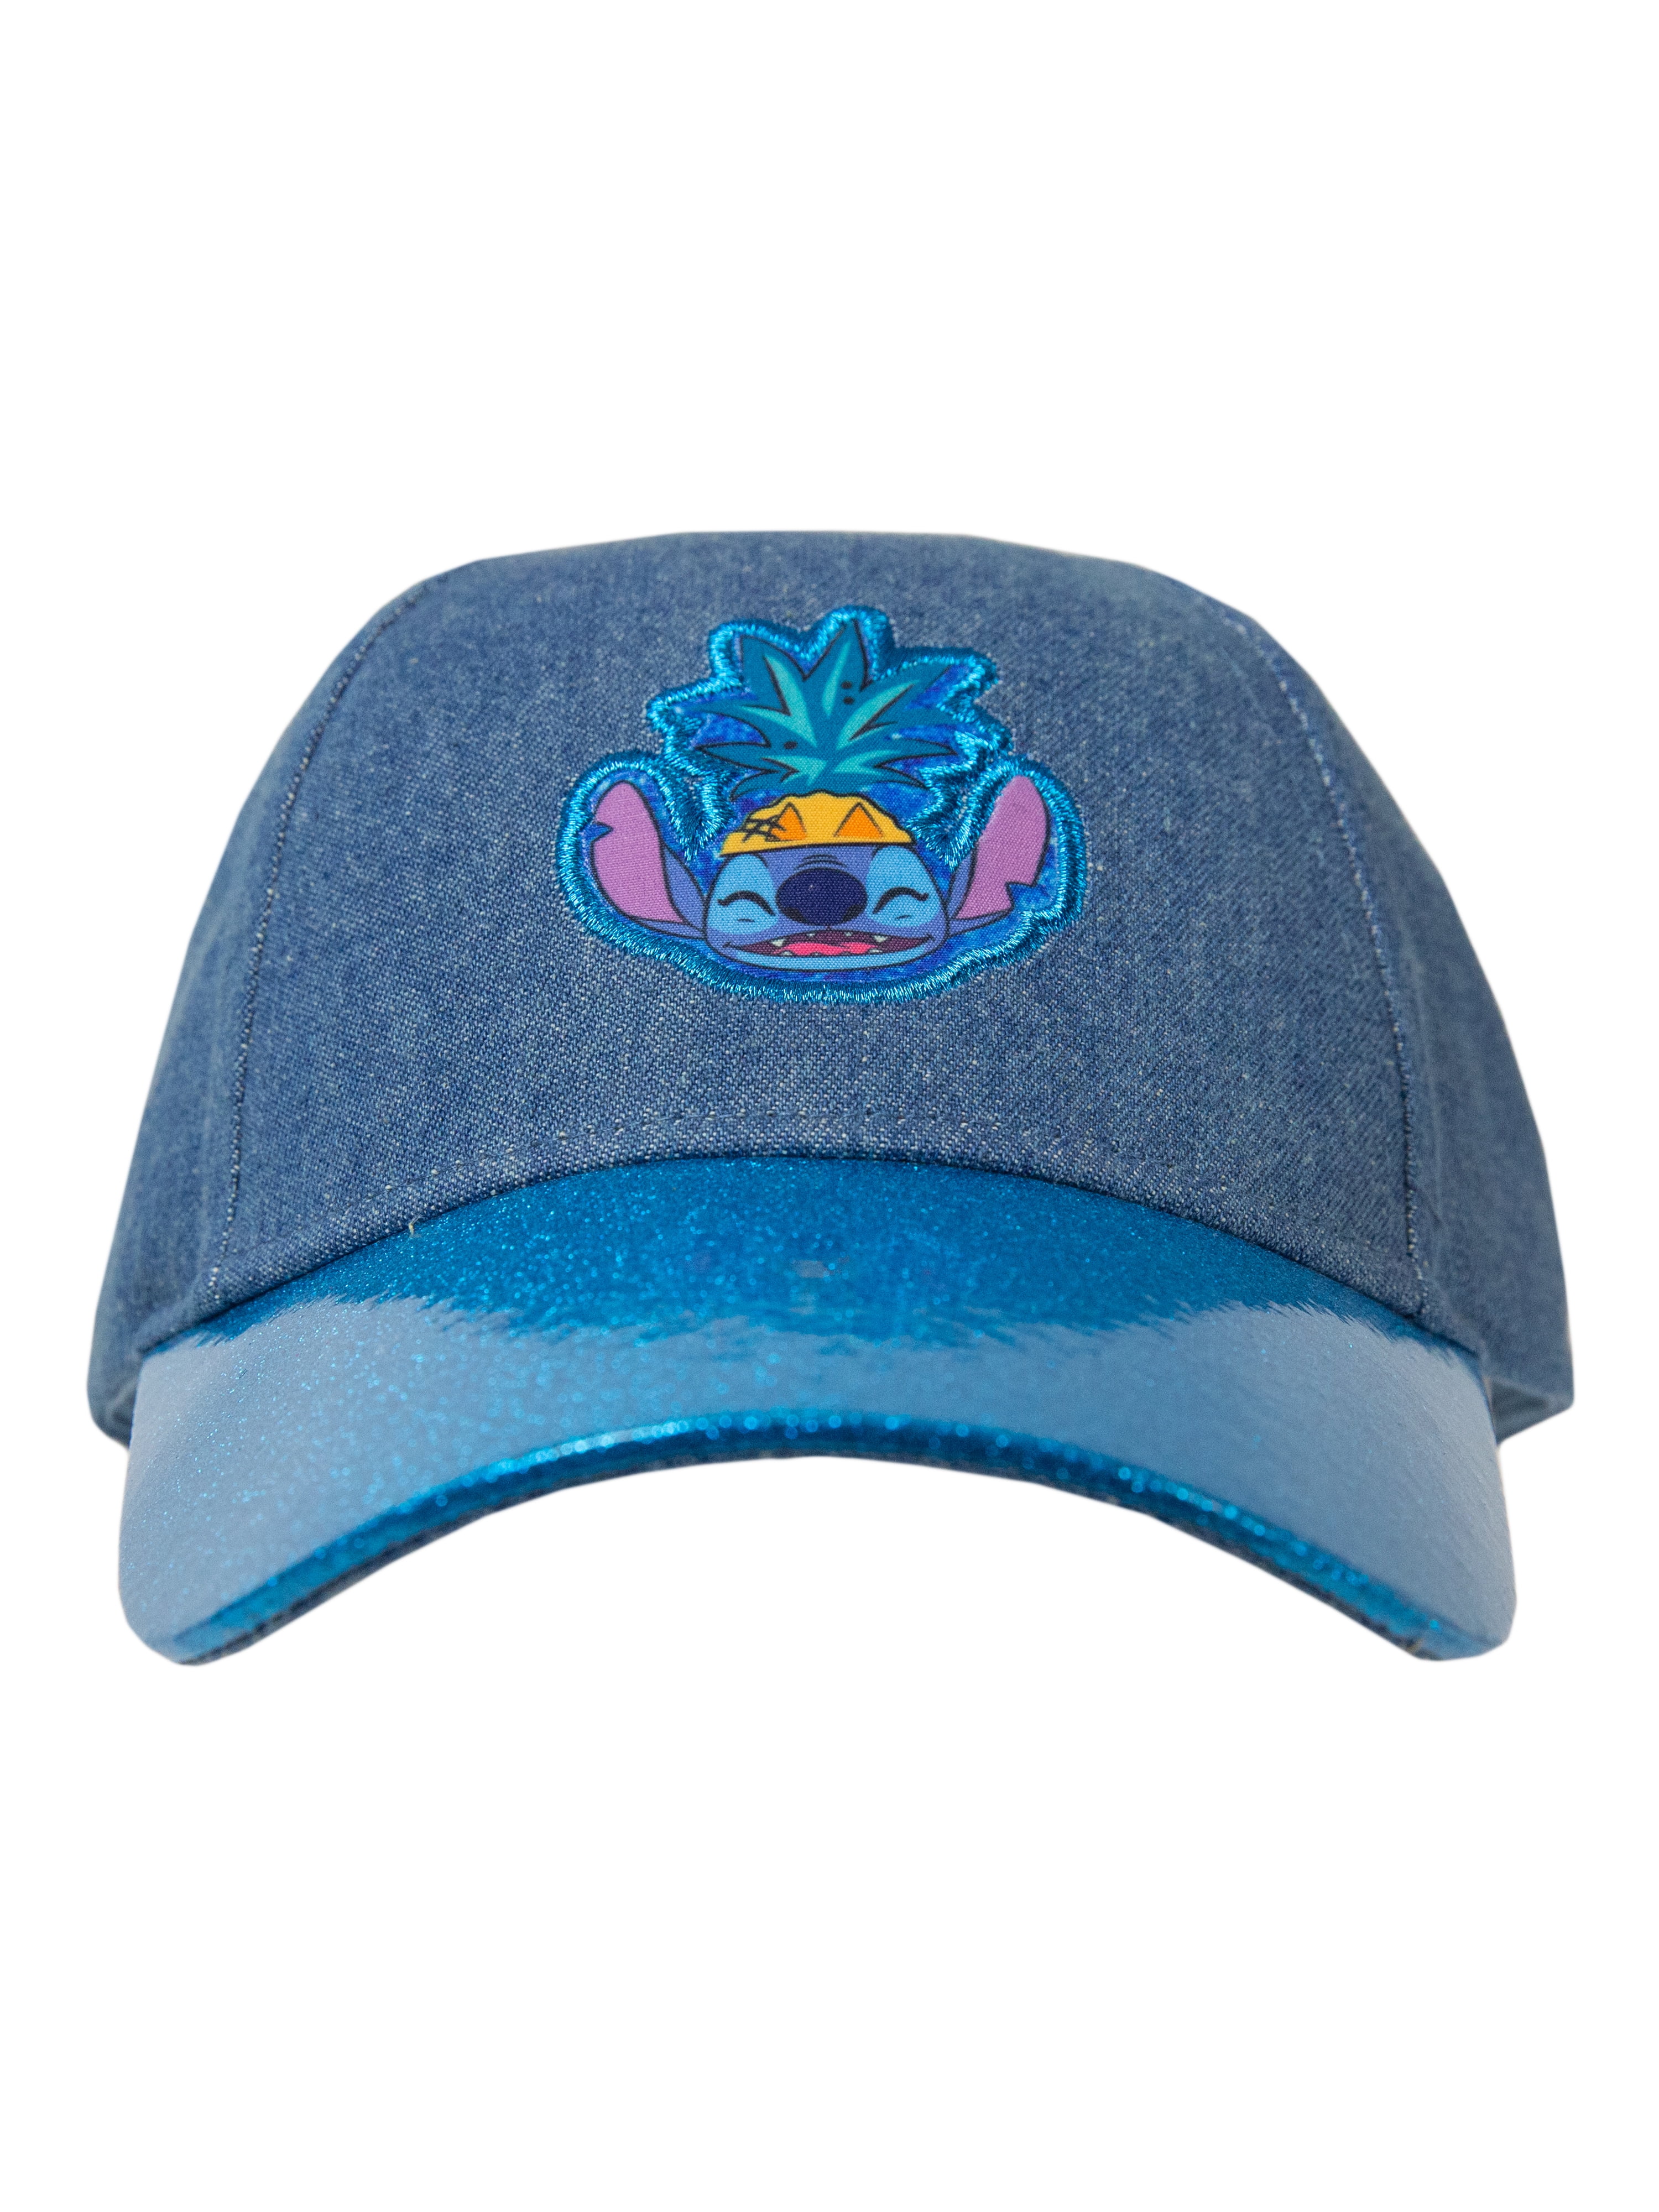 Disney Stitch Baseball Cap Girls Summer 3D Cap for Girls Stitch Gifts